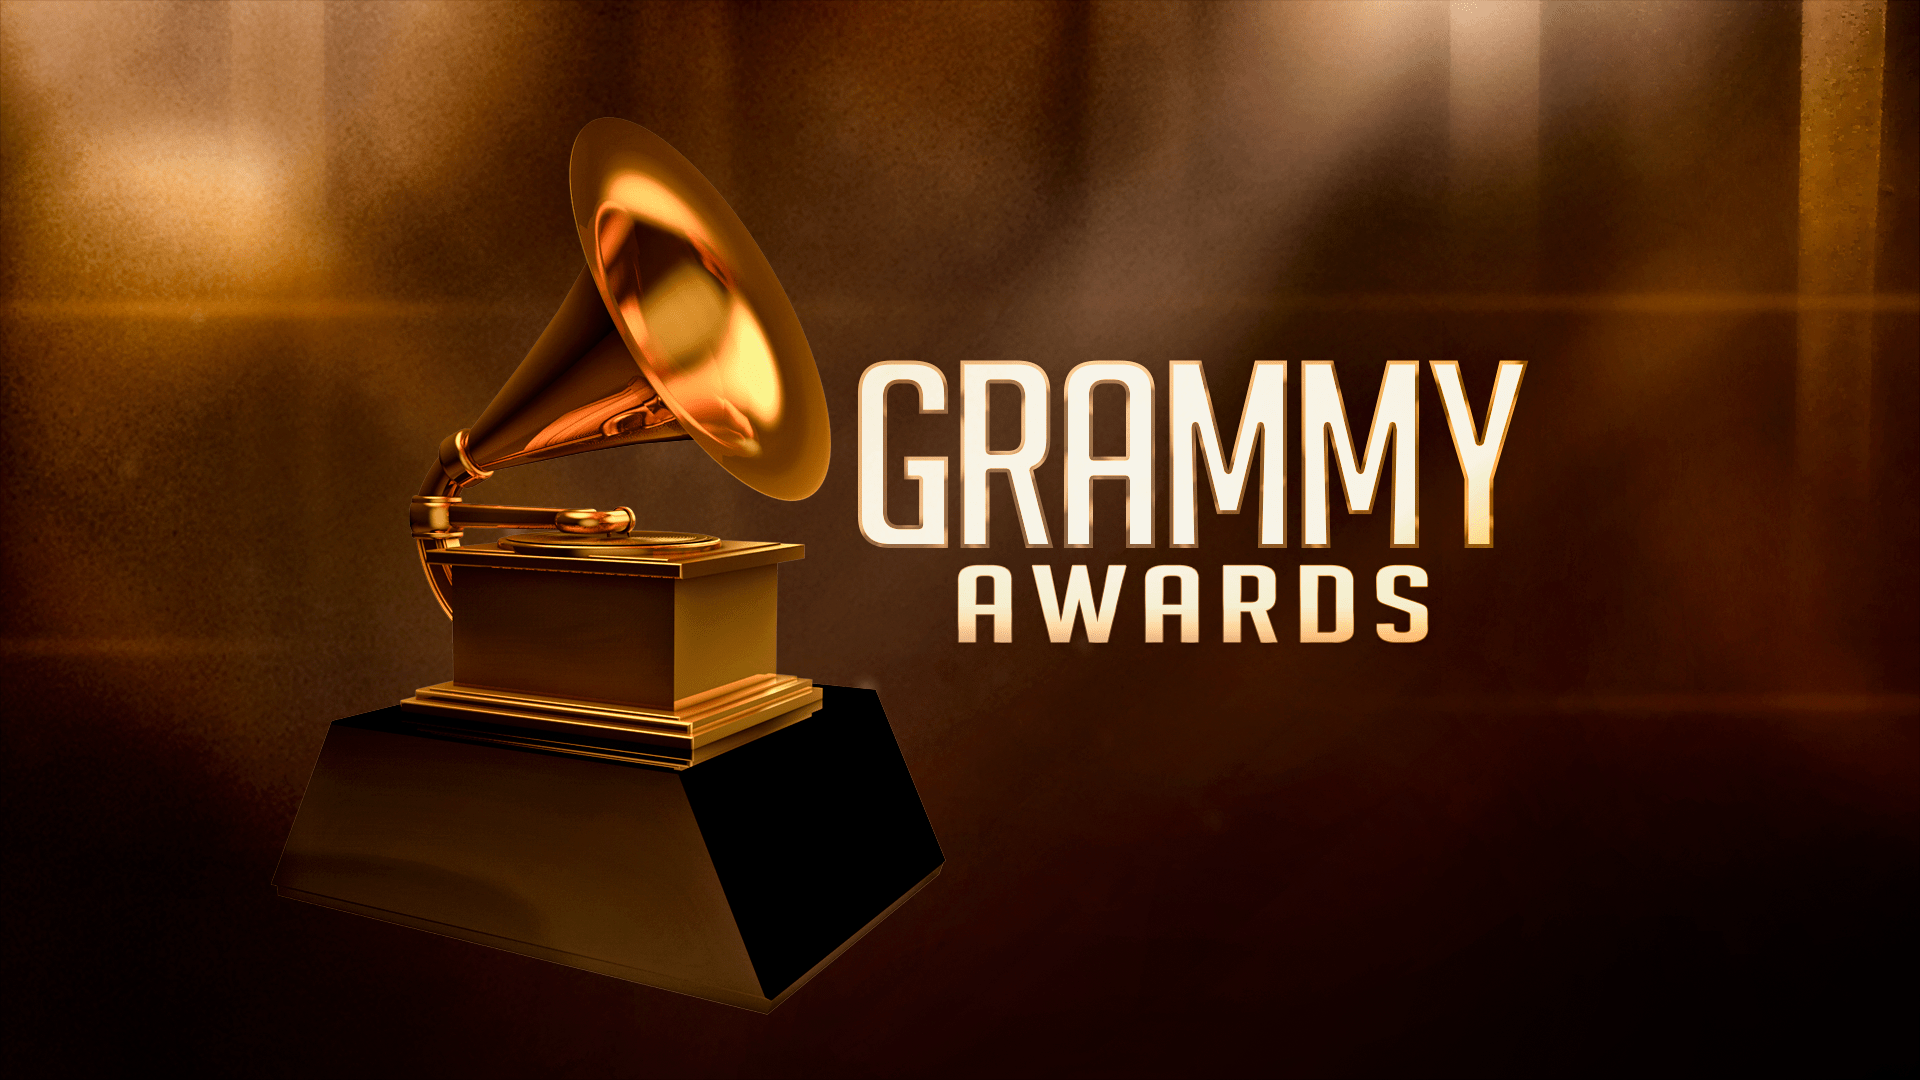 Burna Boy, Tems Nominates For 2023 Grammy Awards [Full Nominees List]